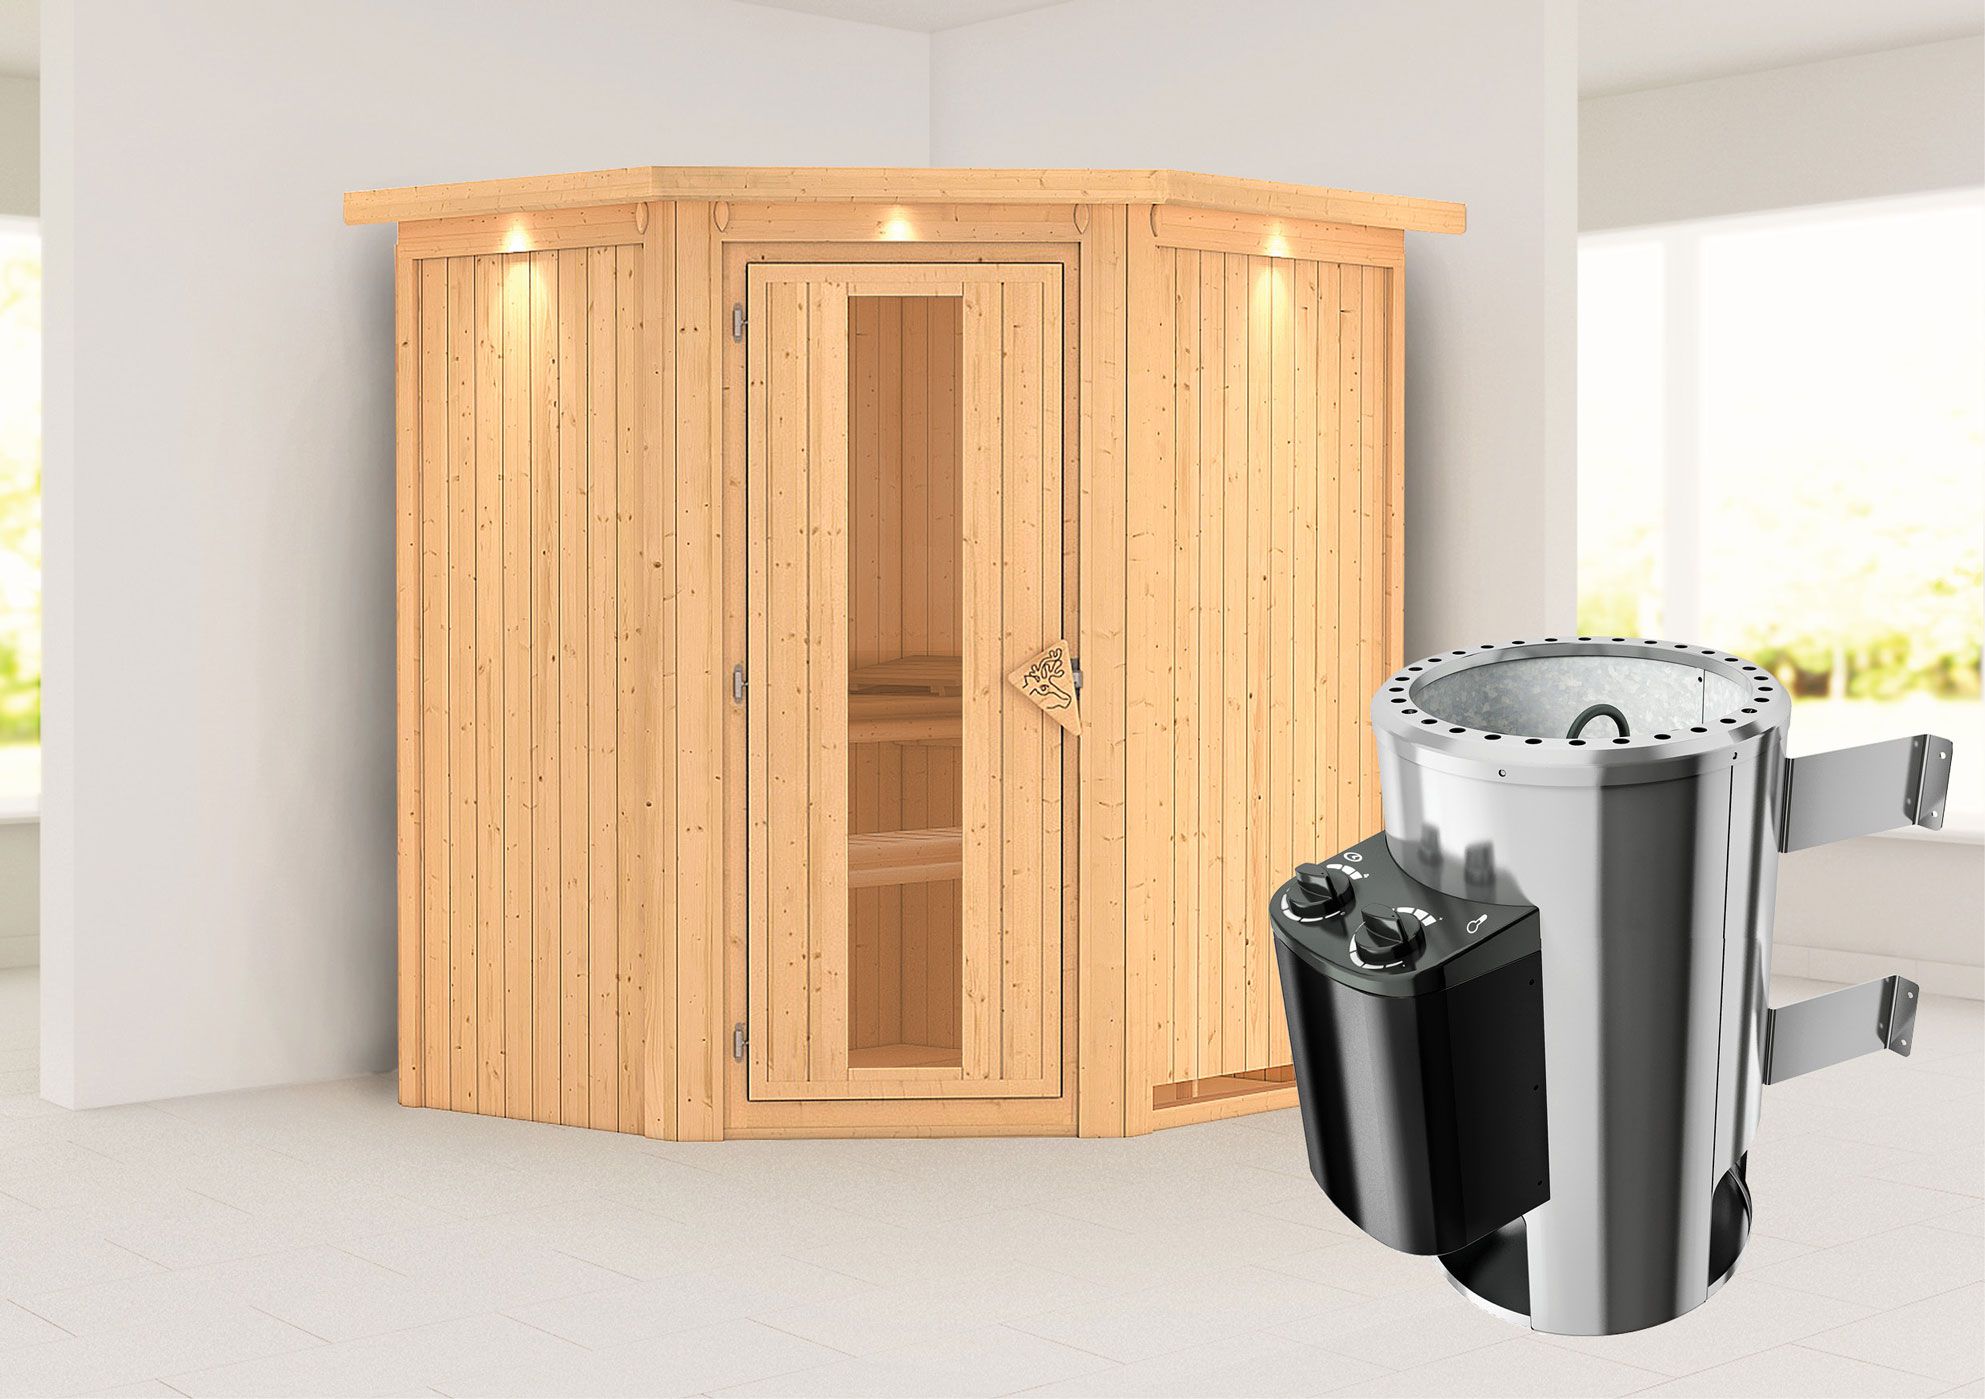 SET-sauna "Kjell" met energiebesparende deur, rand en 3,6 kW kachel - 184 x 165 x 202 cm (B x D x H)